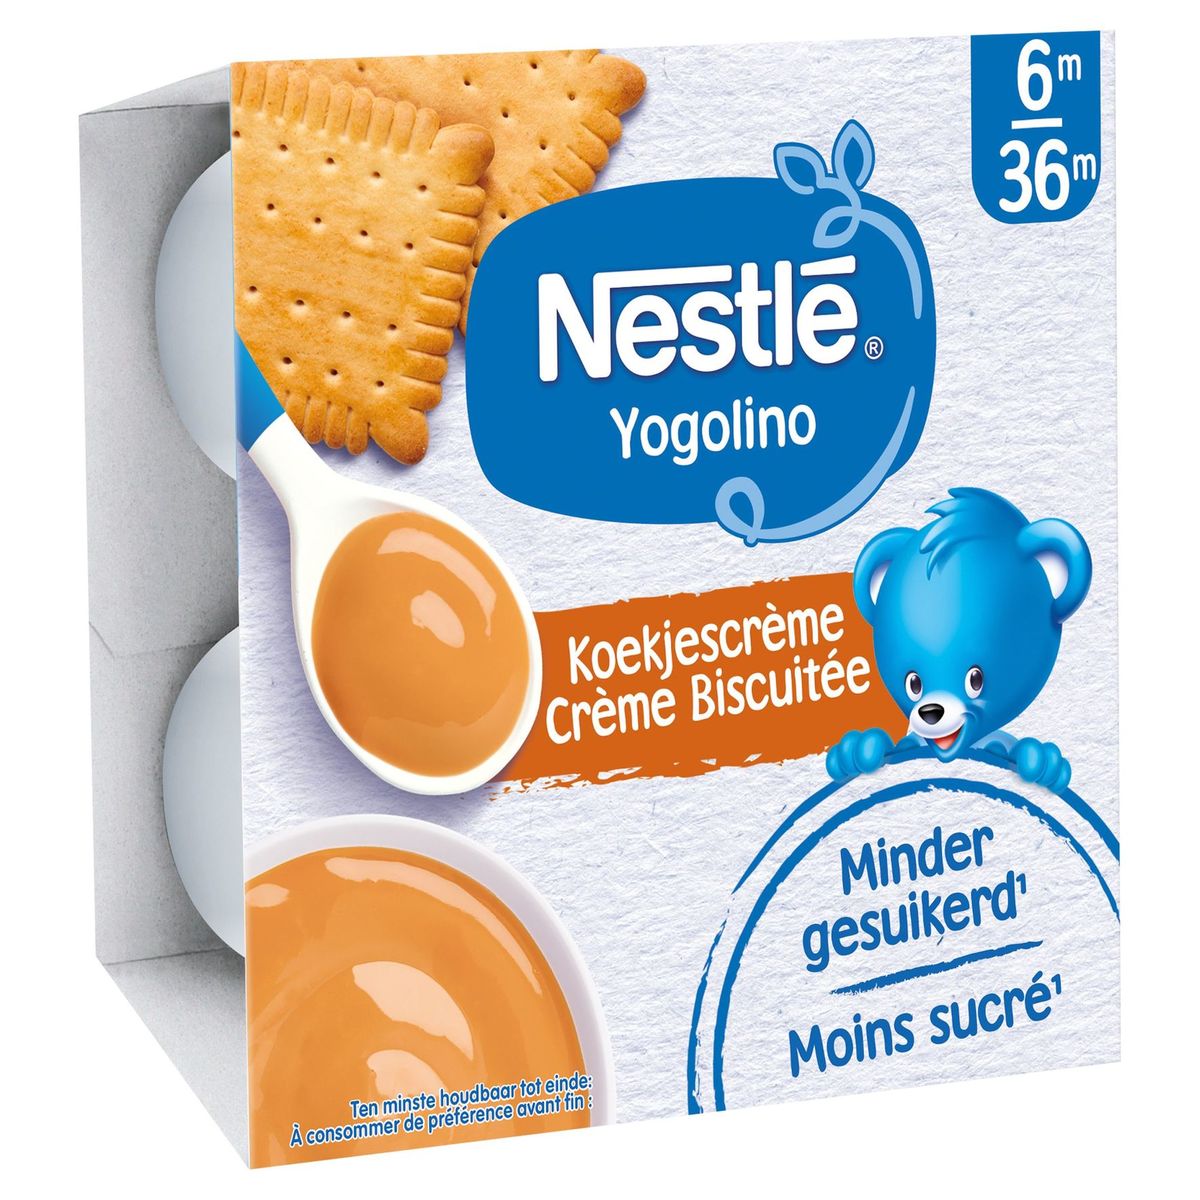 Nestlé Yogolino Koekjescrème 6M 36M 4 x 100 g